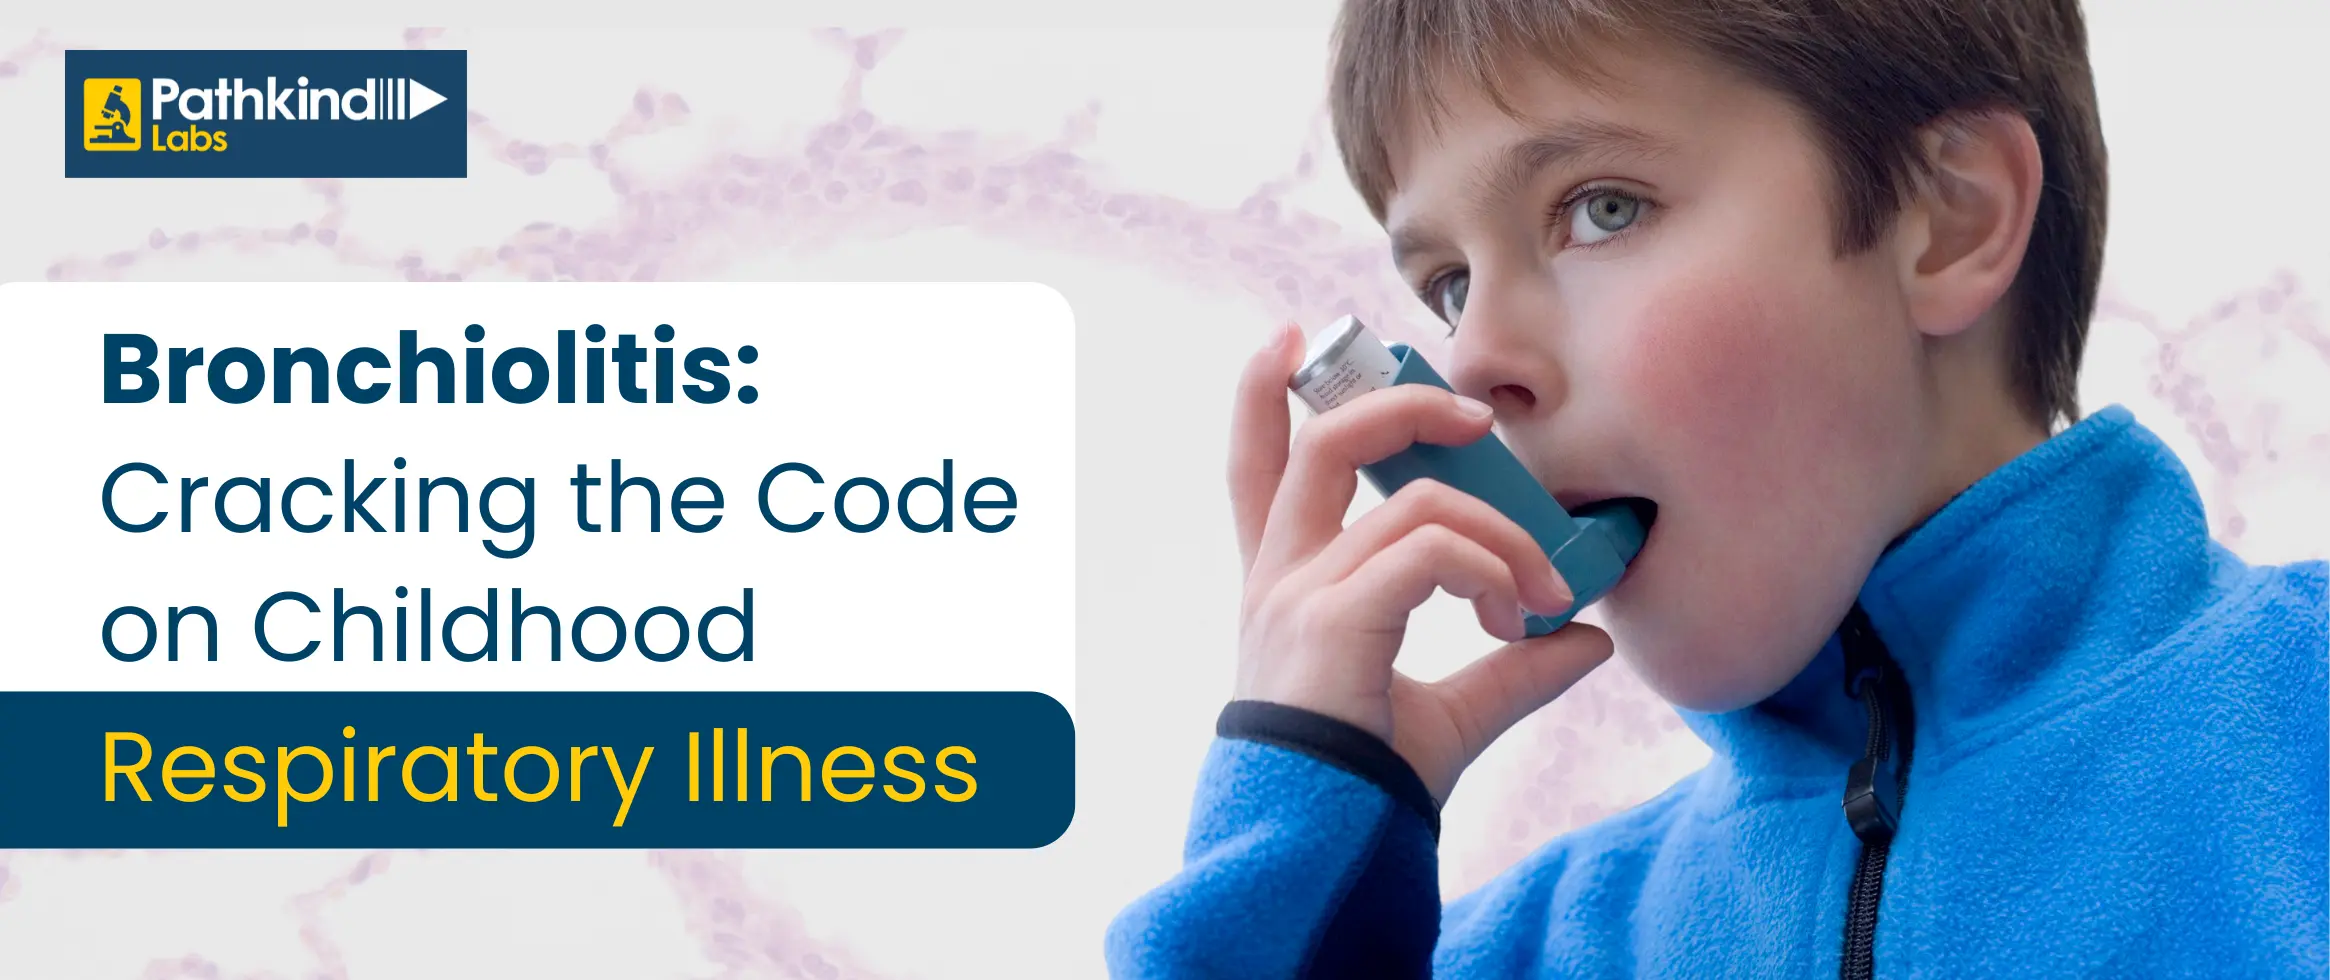 Cracking the Code on Childhood Respiratory Illness